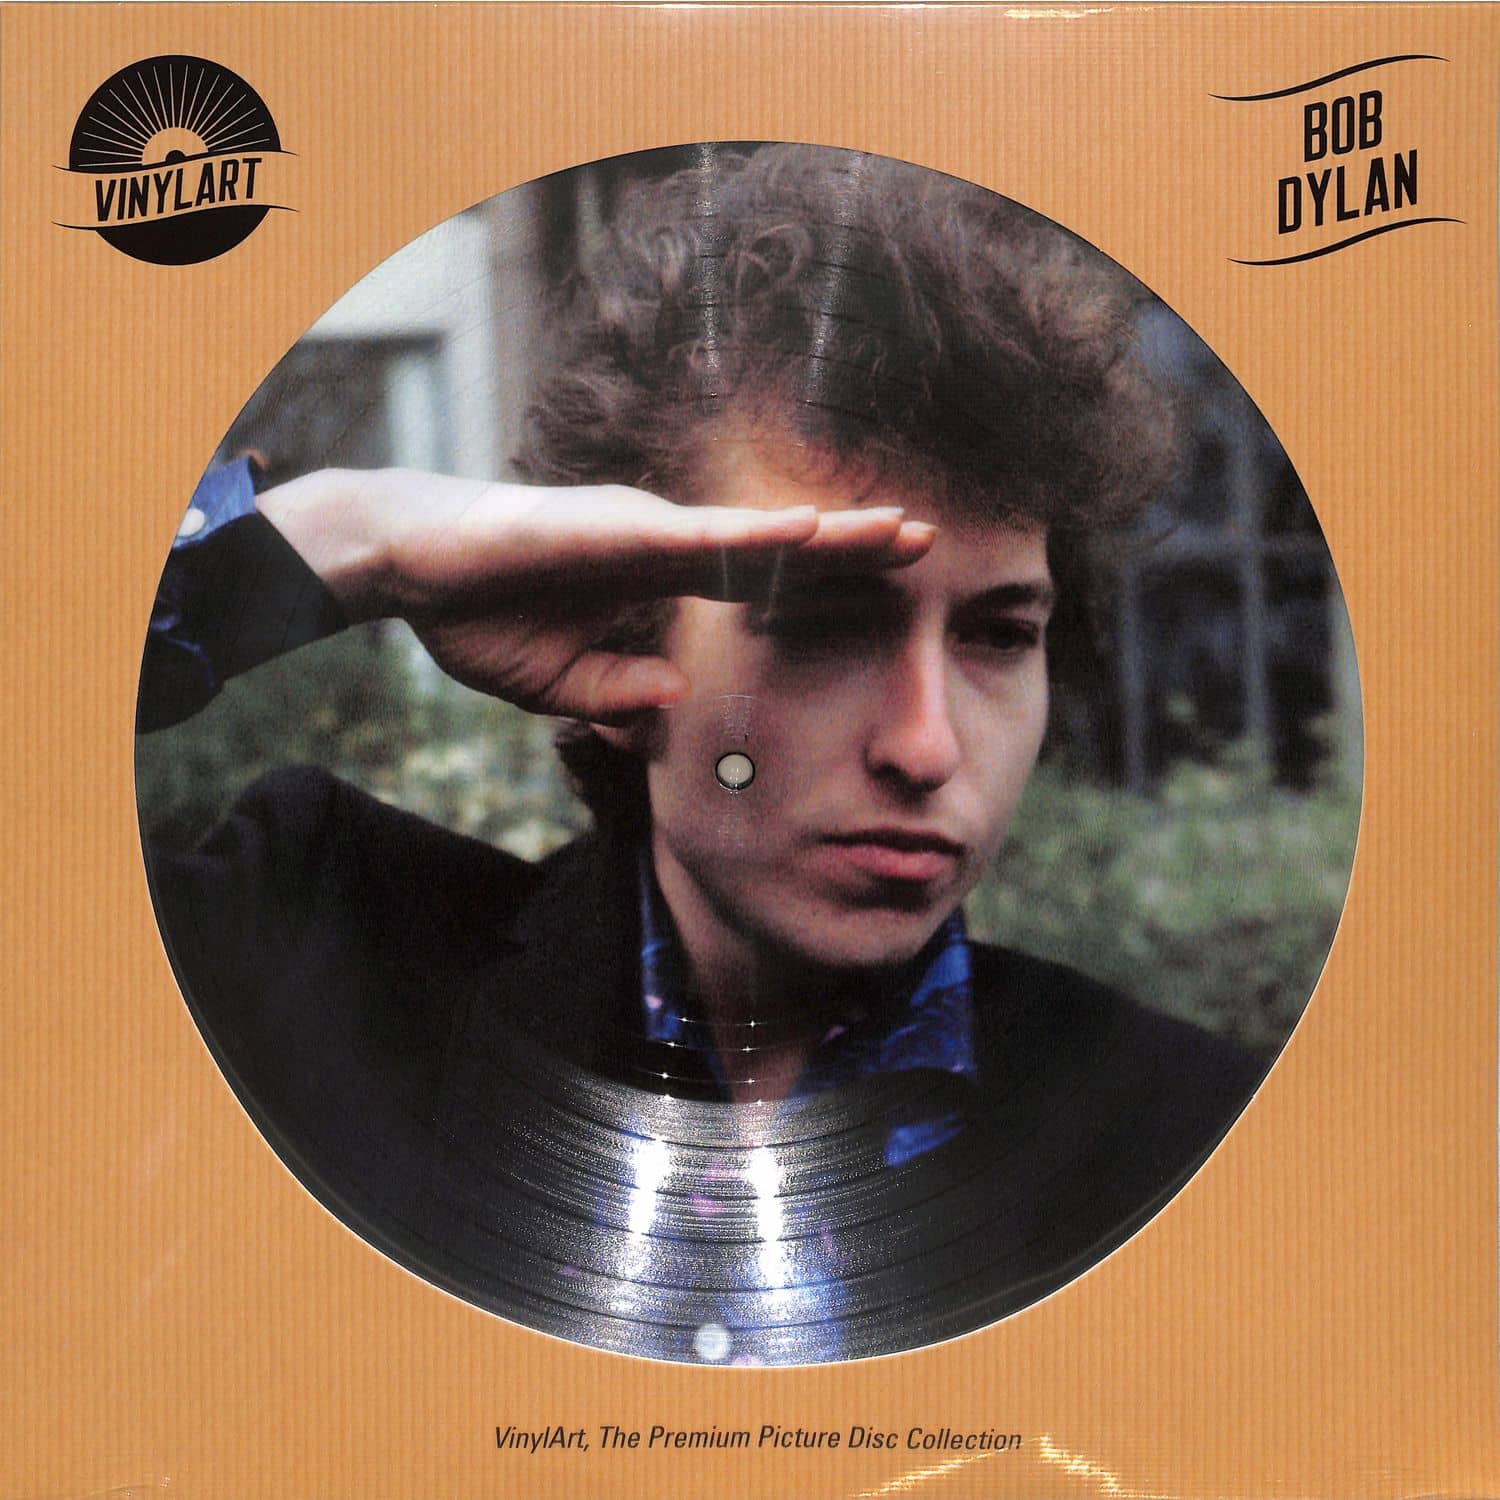 Bob Dylan - VINYLART - BOB DYLAN 